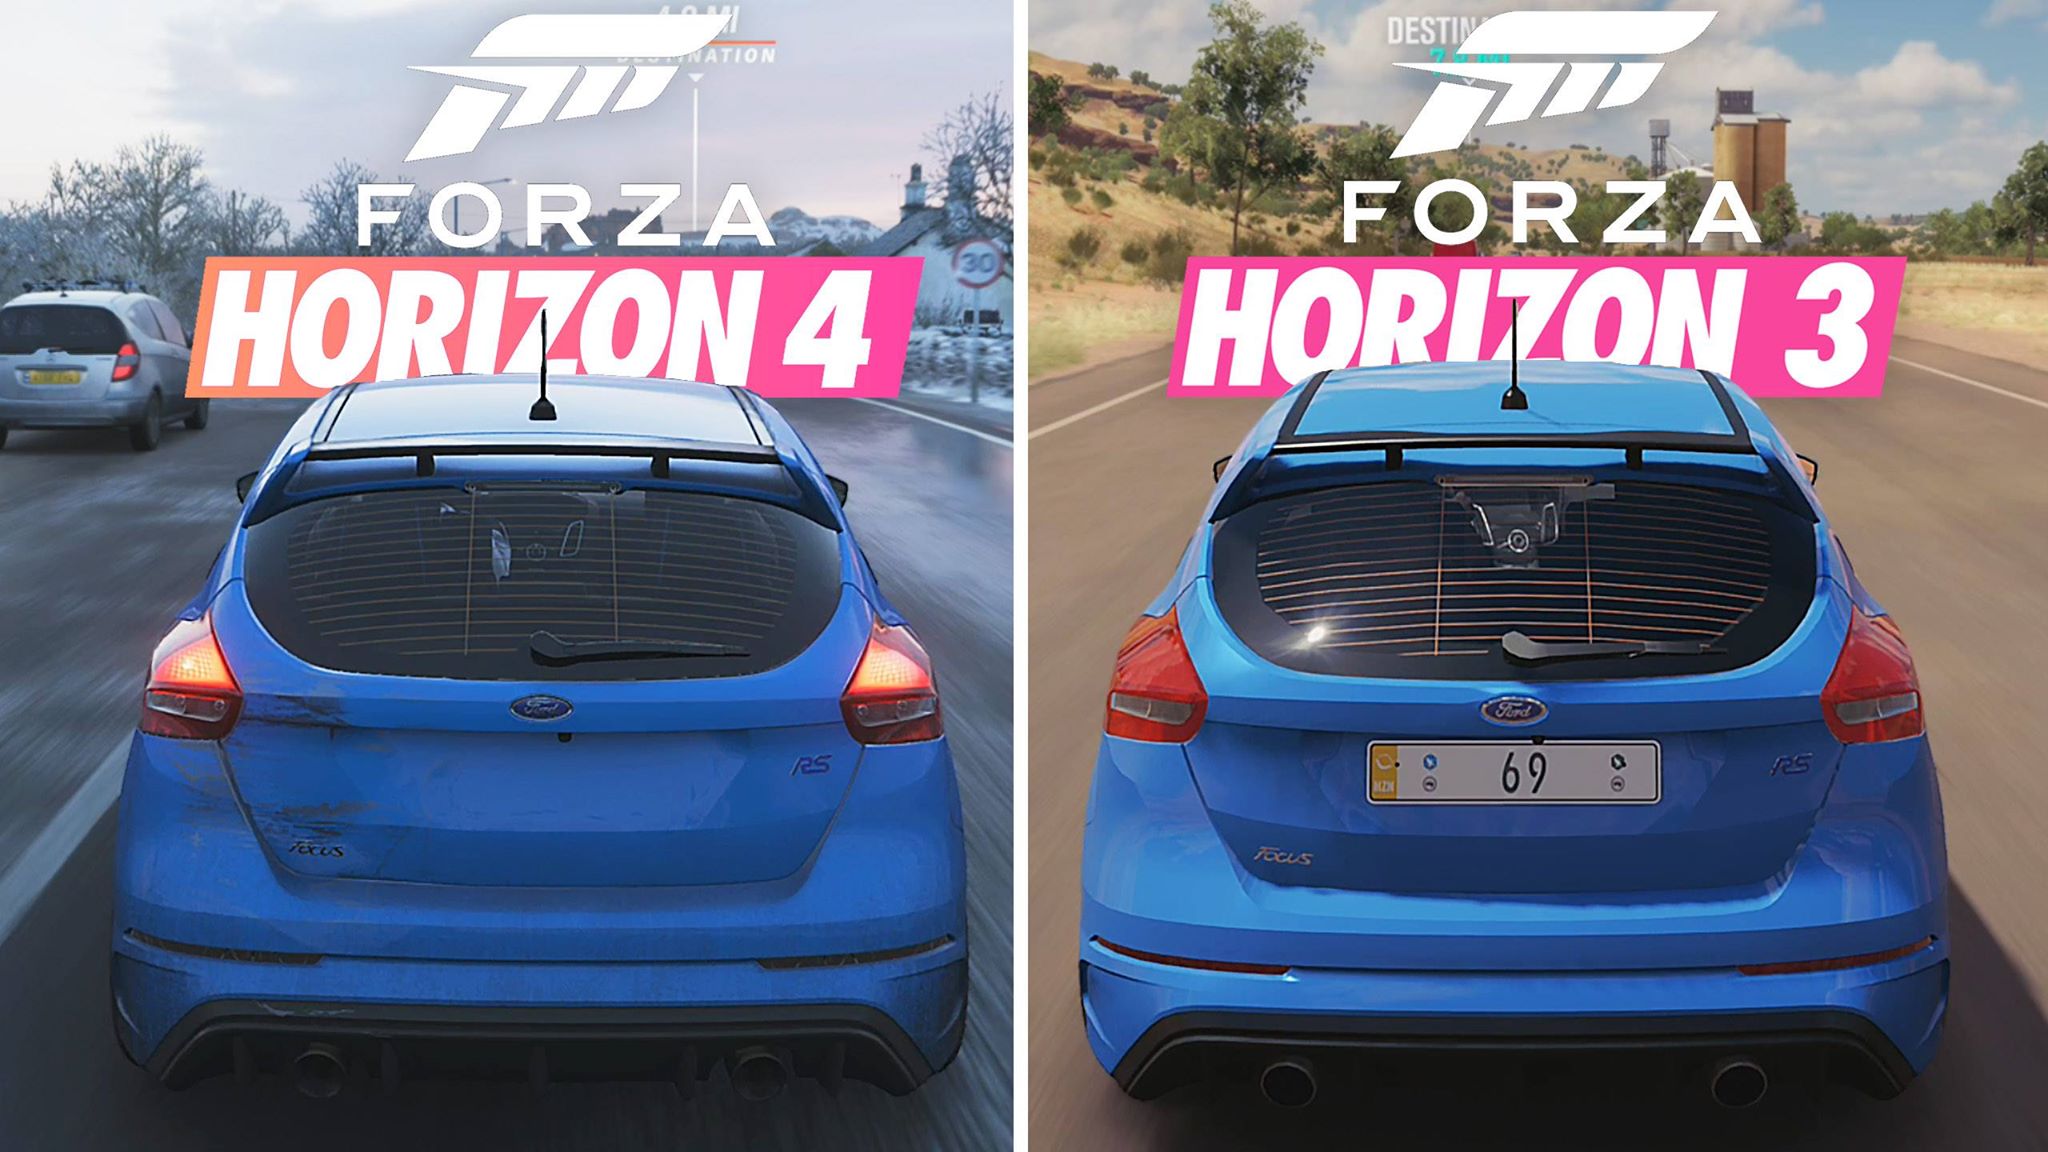 Forza Horizon 4 Vs Forza Horizon 3 Map Size And Graphics Comparison The Nobeds